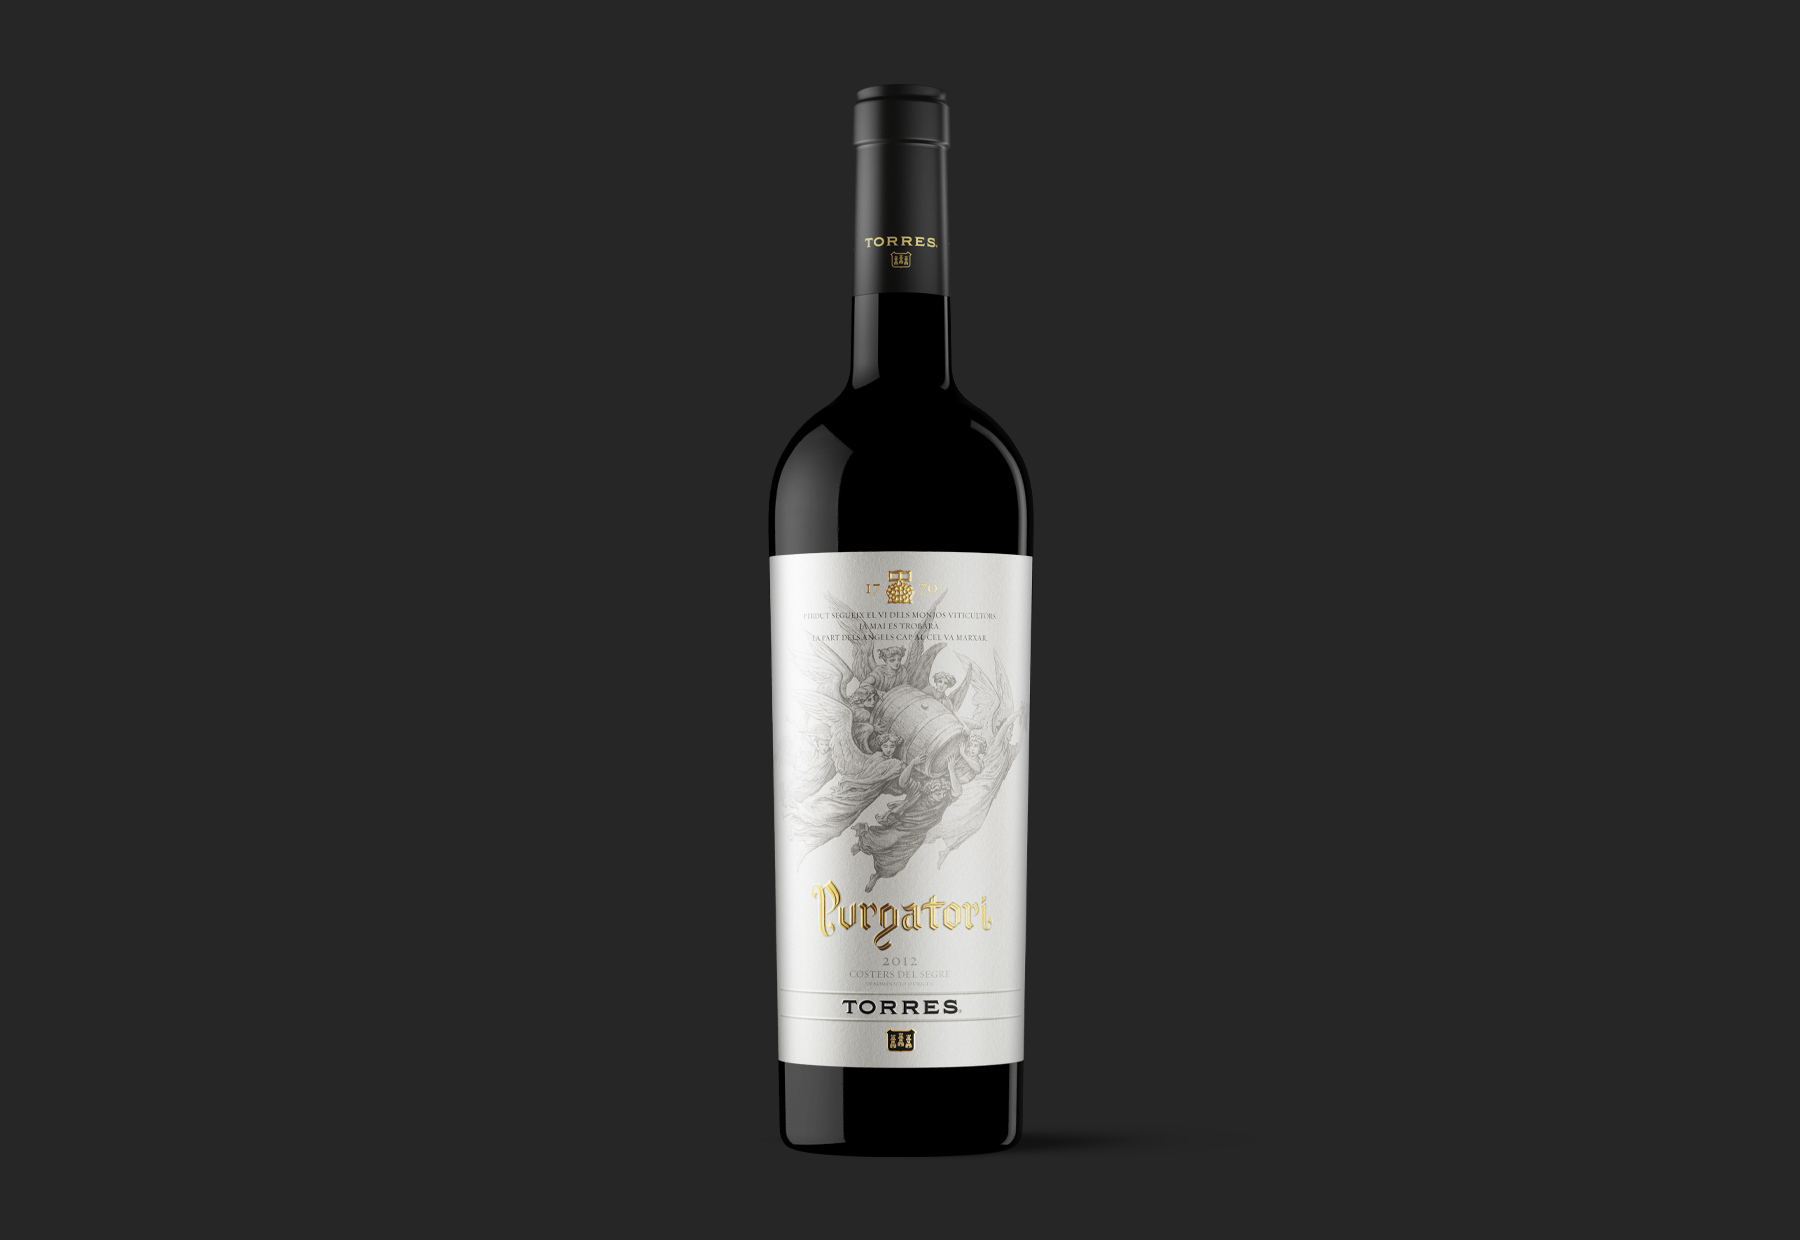 “Purgatori” A Wine of Legend Designed by Moruba